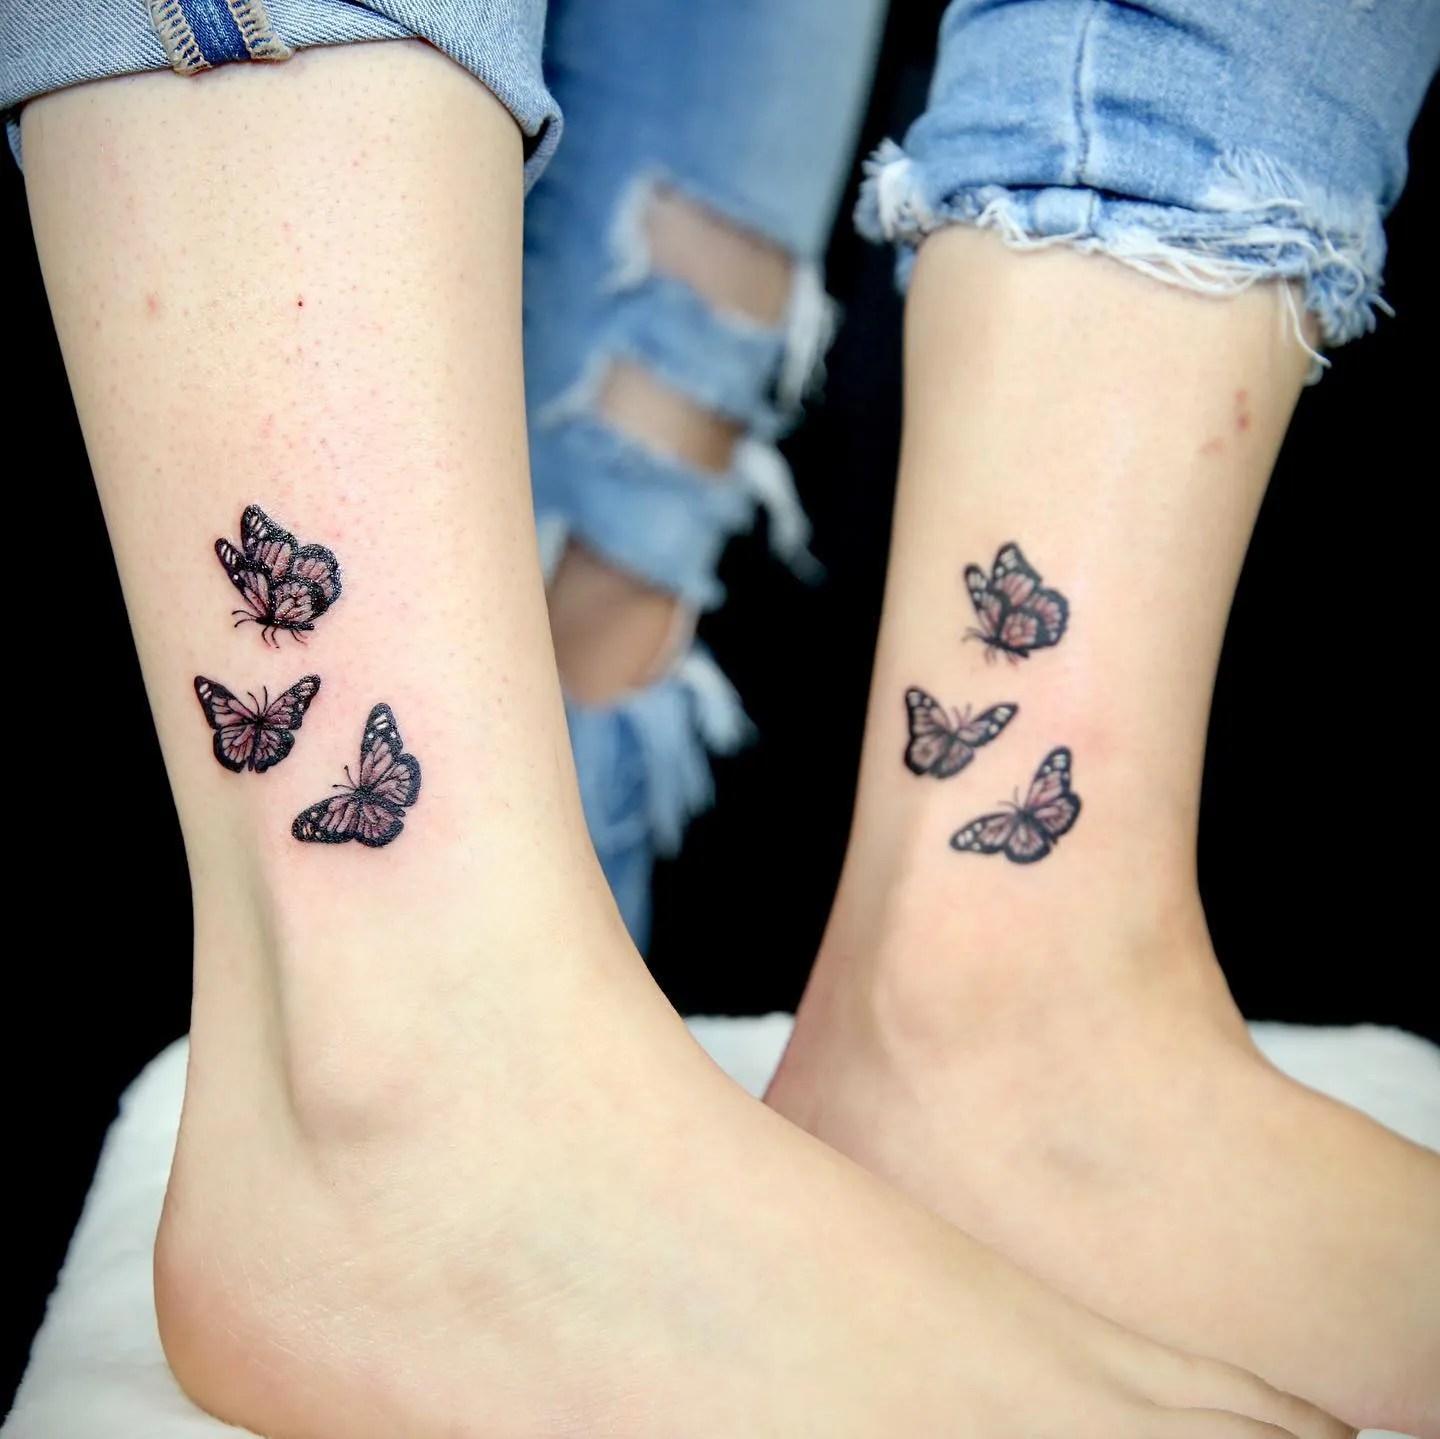 Matching butterfly woman tattoo for best friends